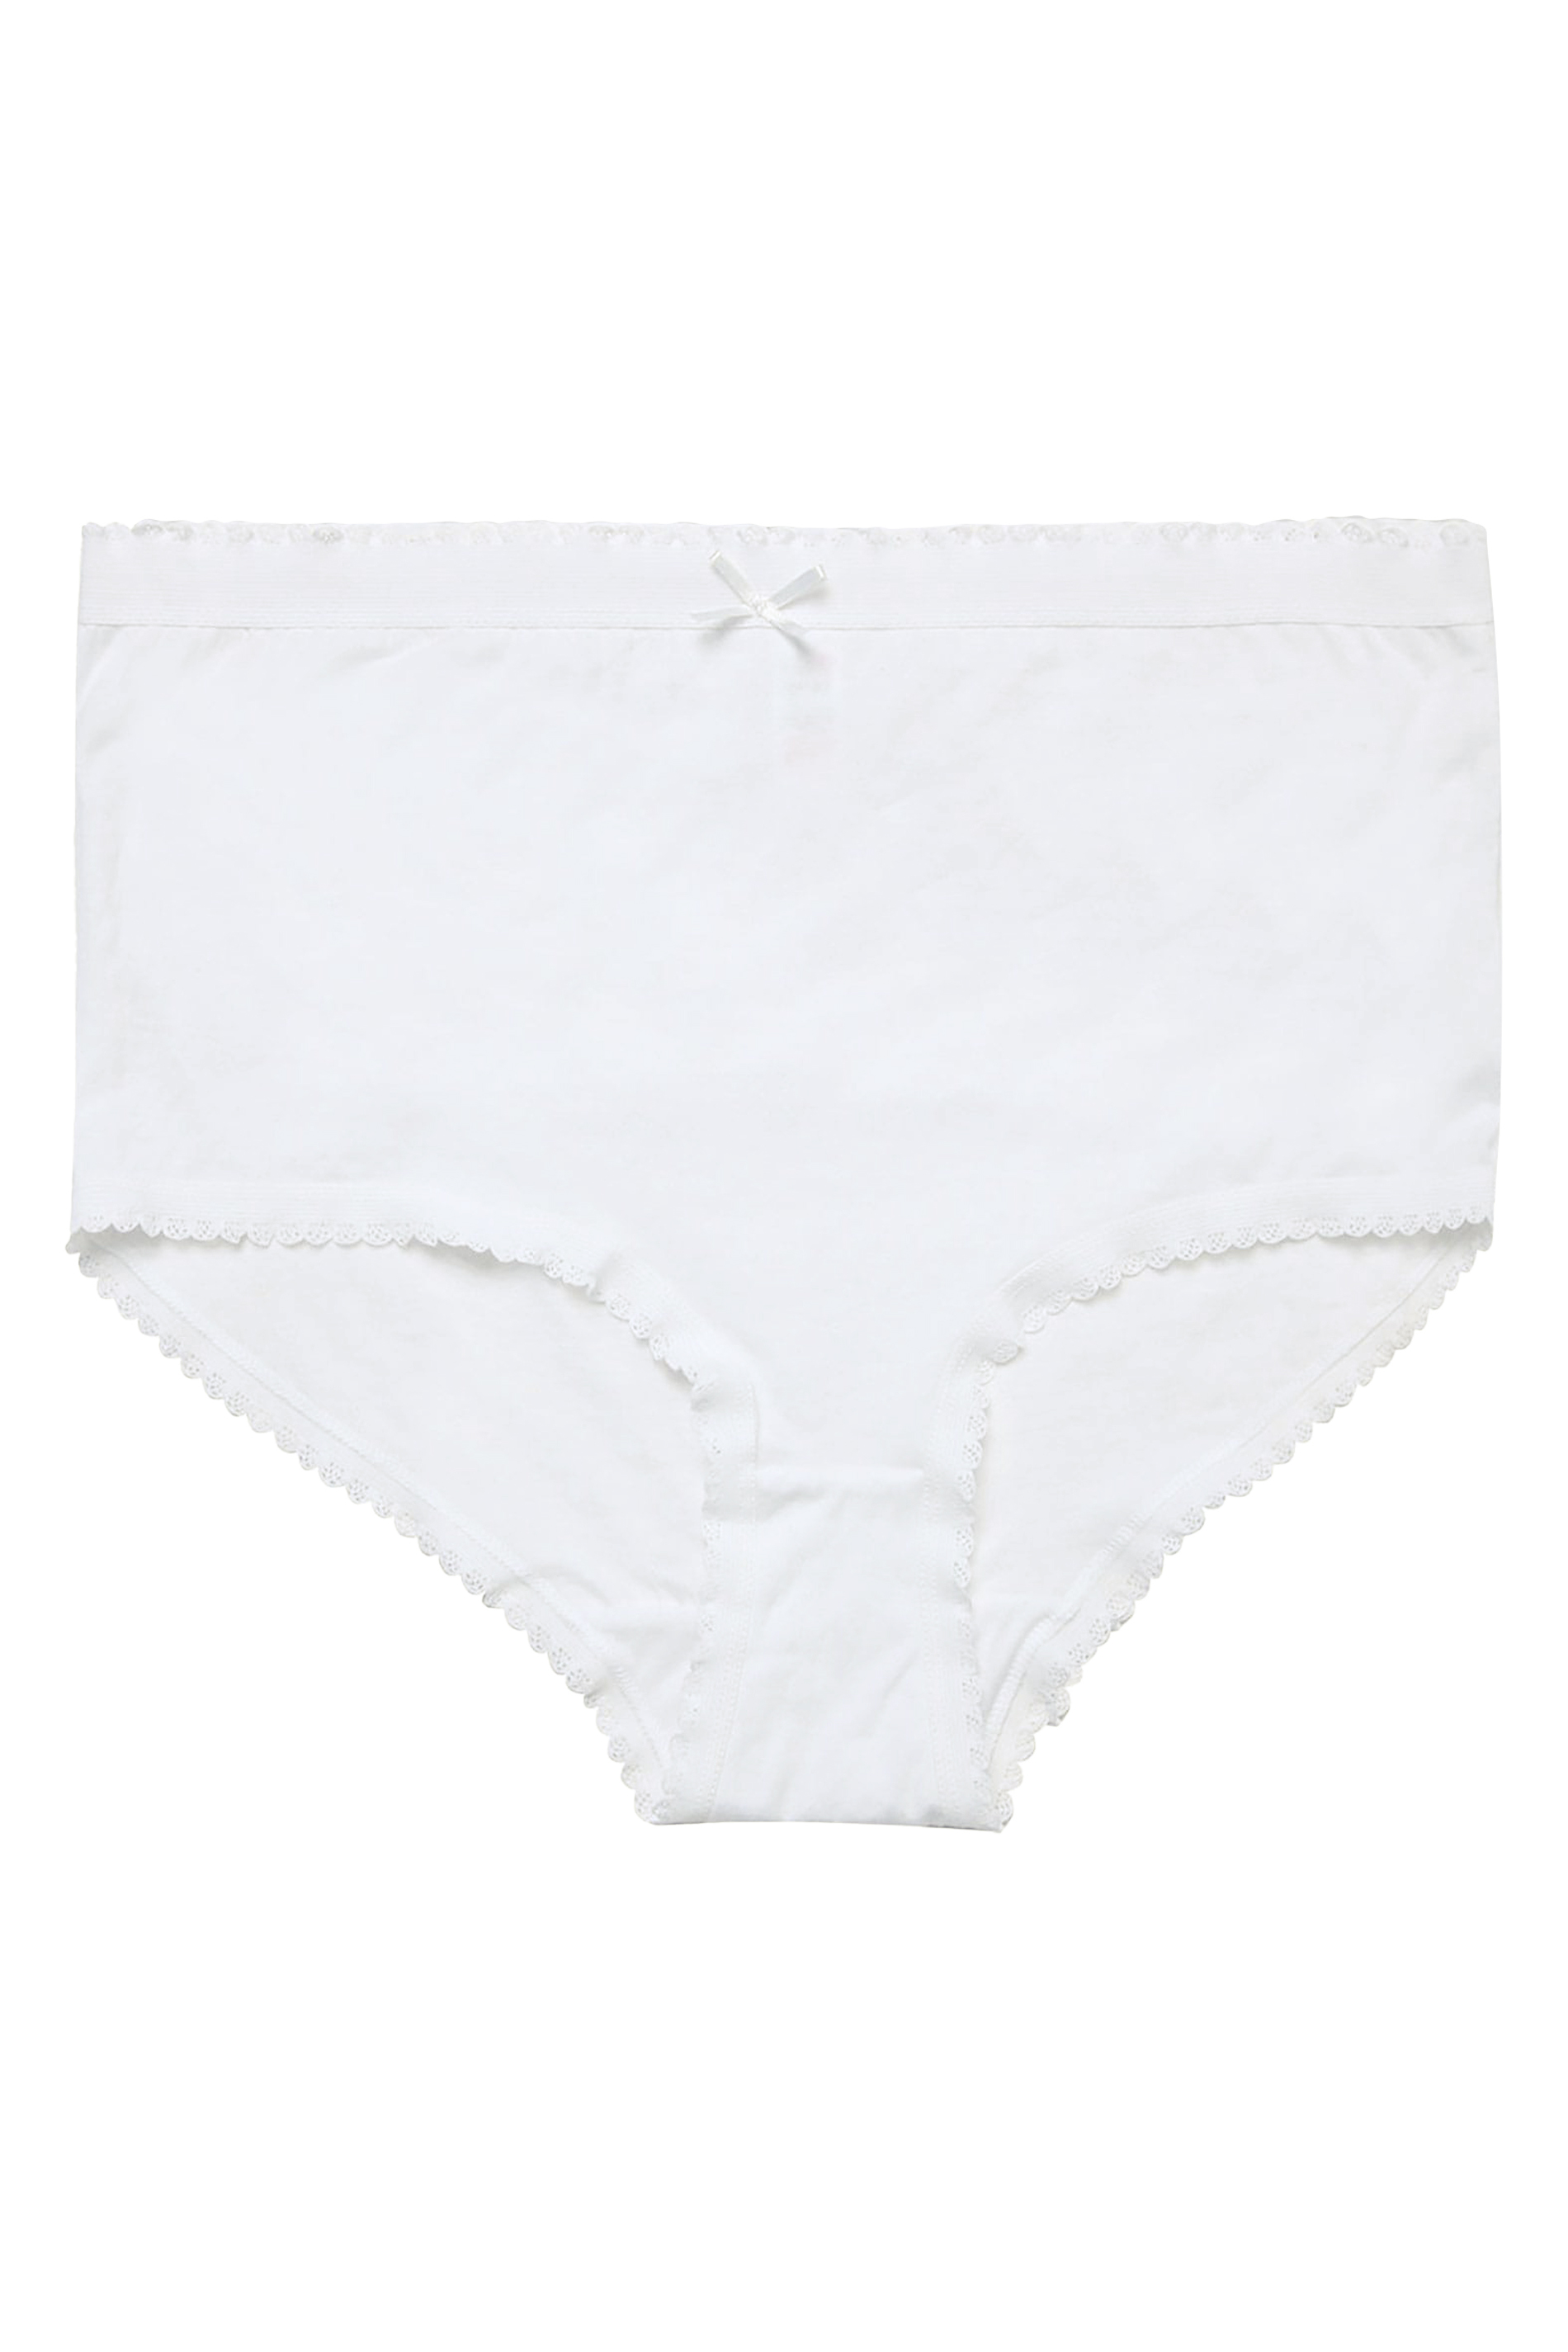 Barbra Lingerie 5 Pack Plus Size Underwear Women Light Control Full Cover  Lace Briefs Panties (Medium) : : Clothing, Shoes & Accessories